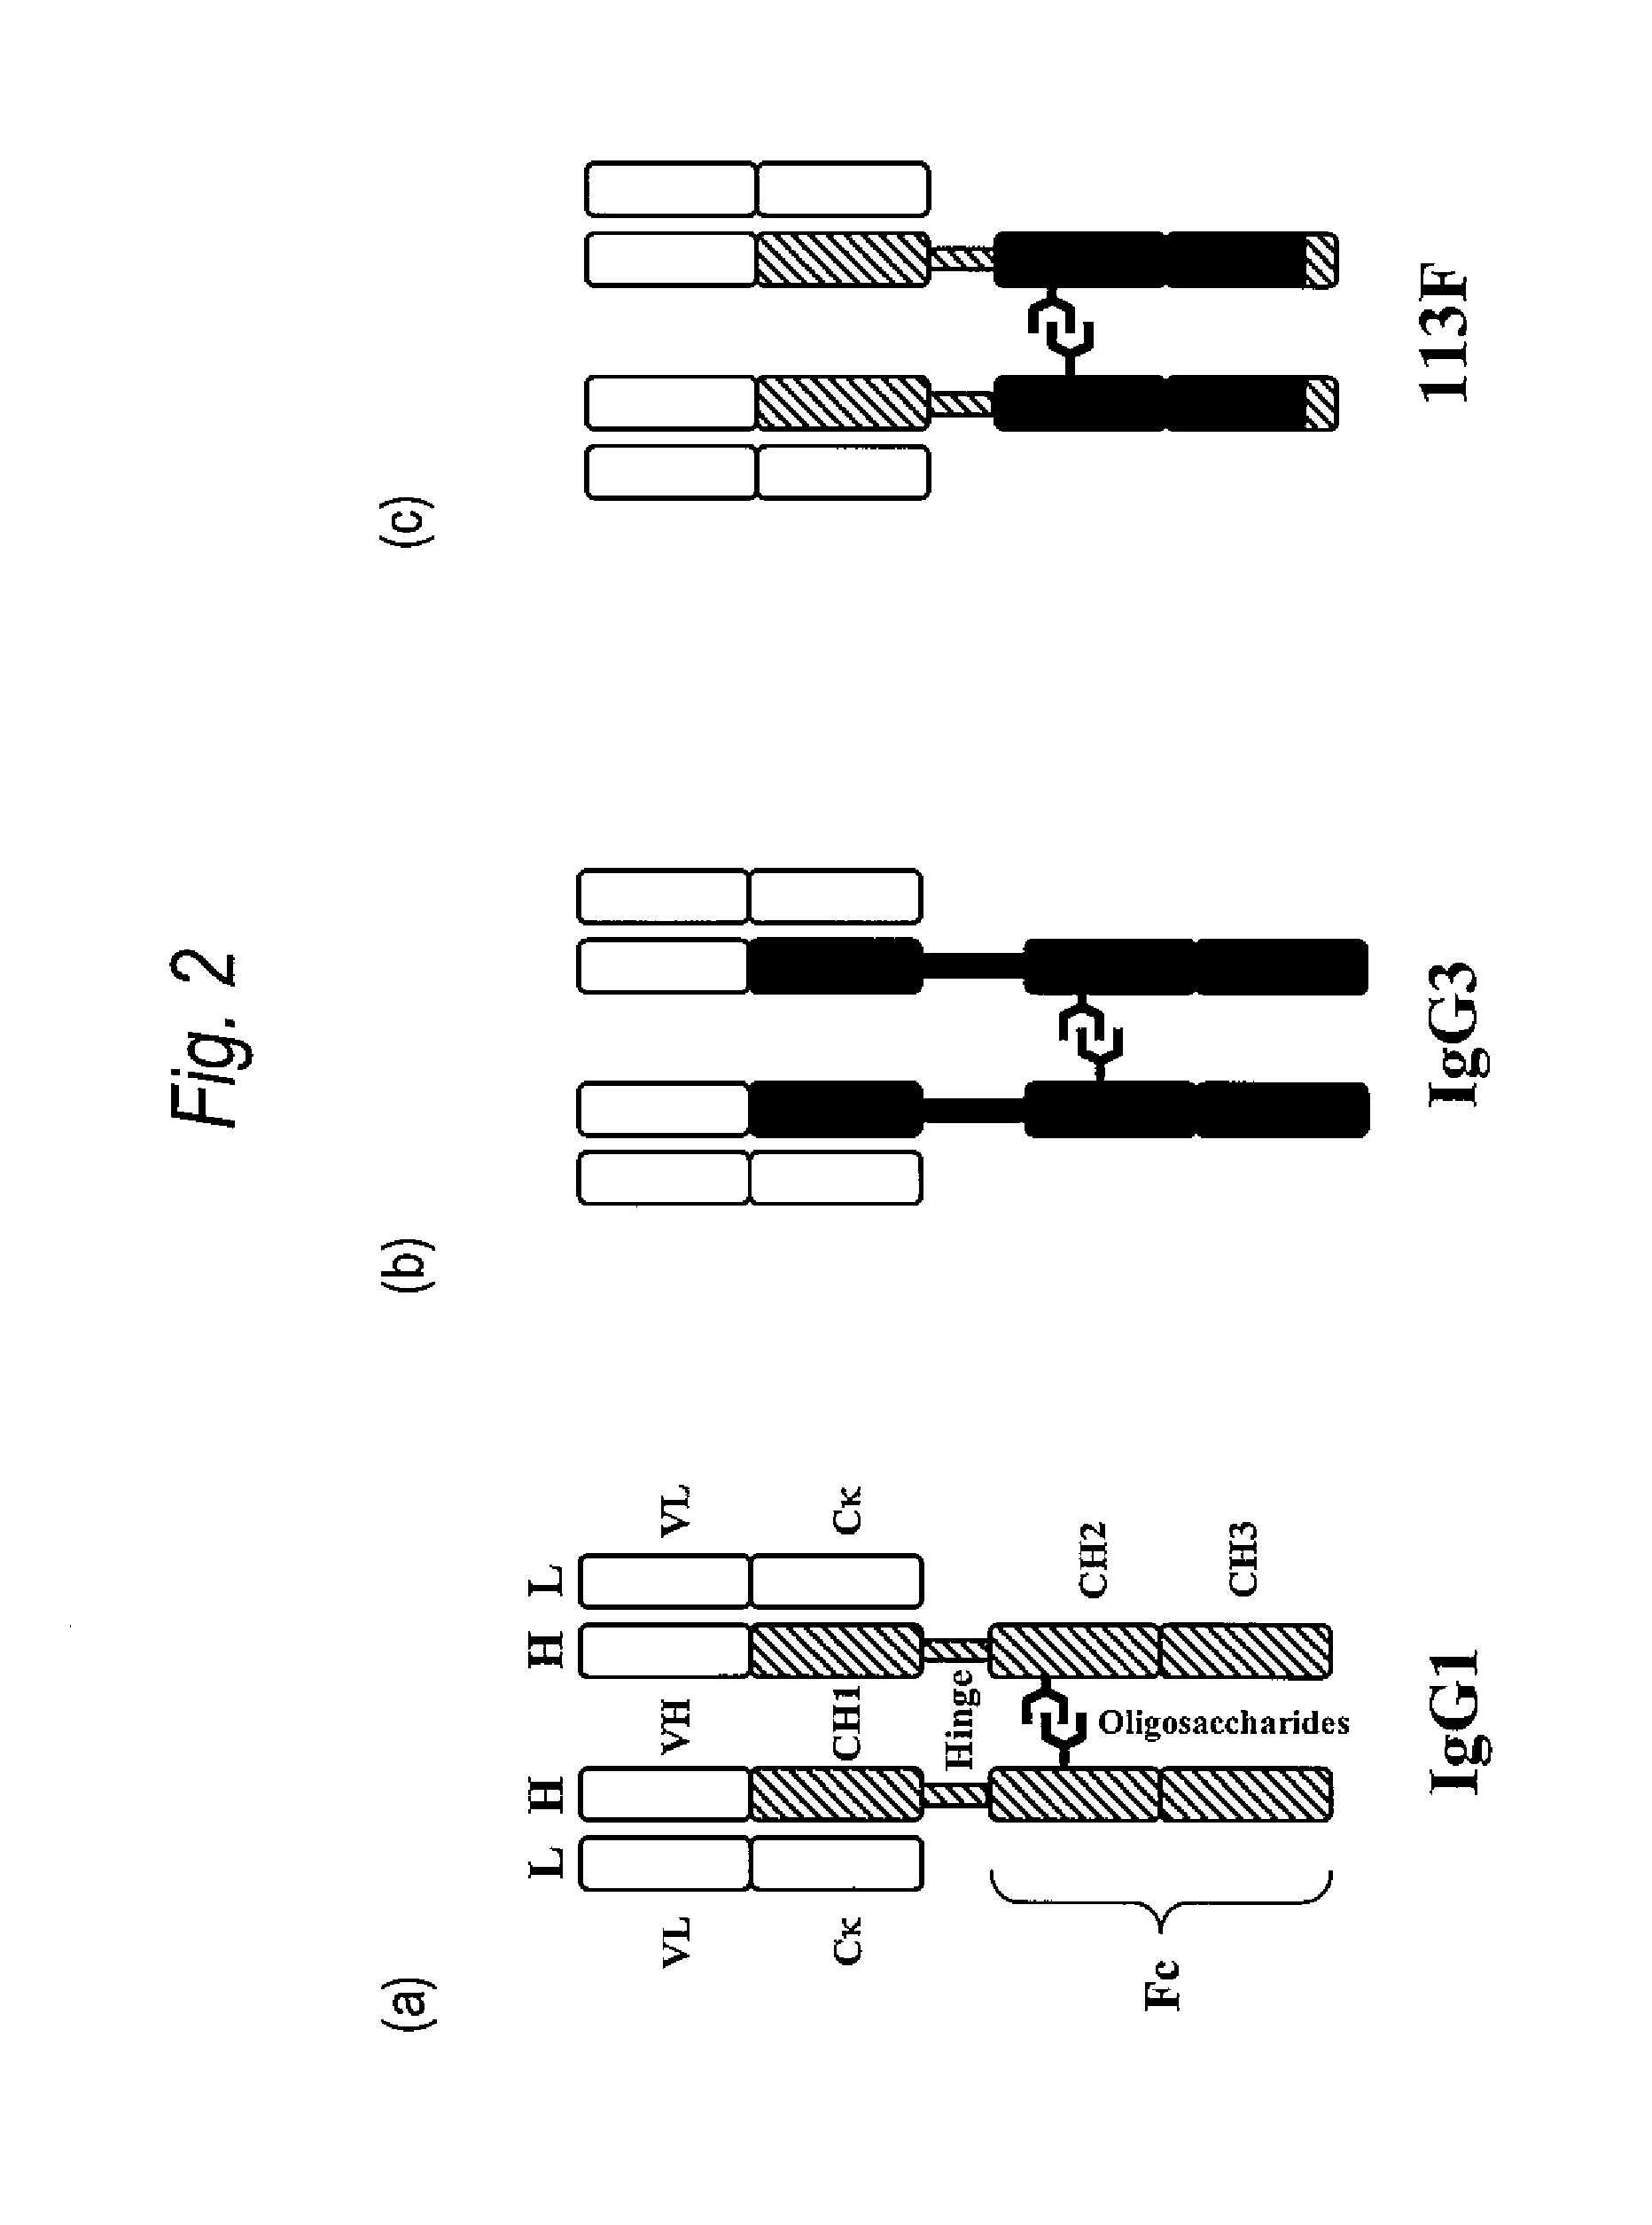 Antibody variants composition